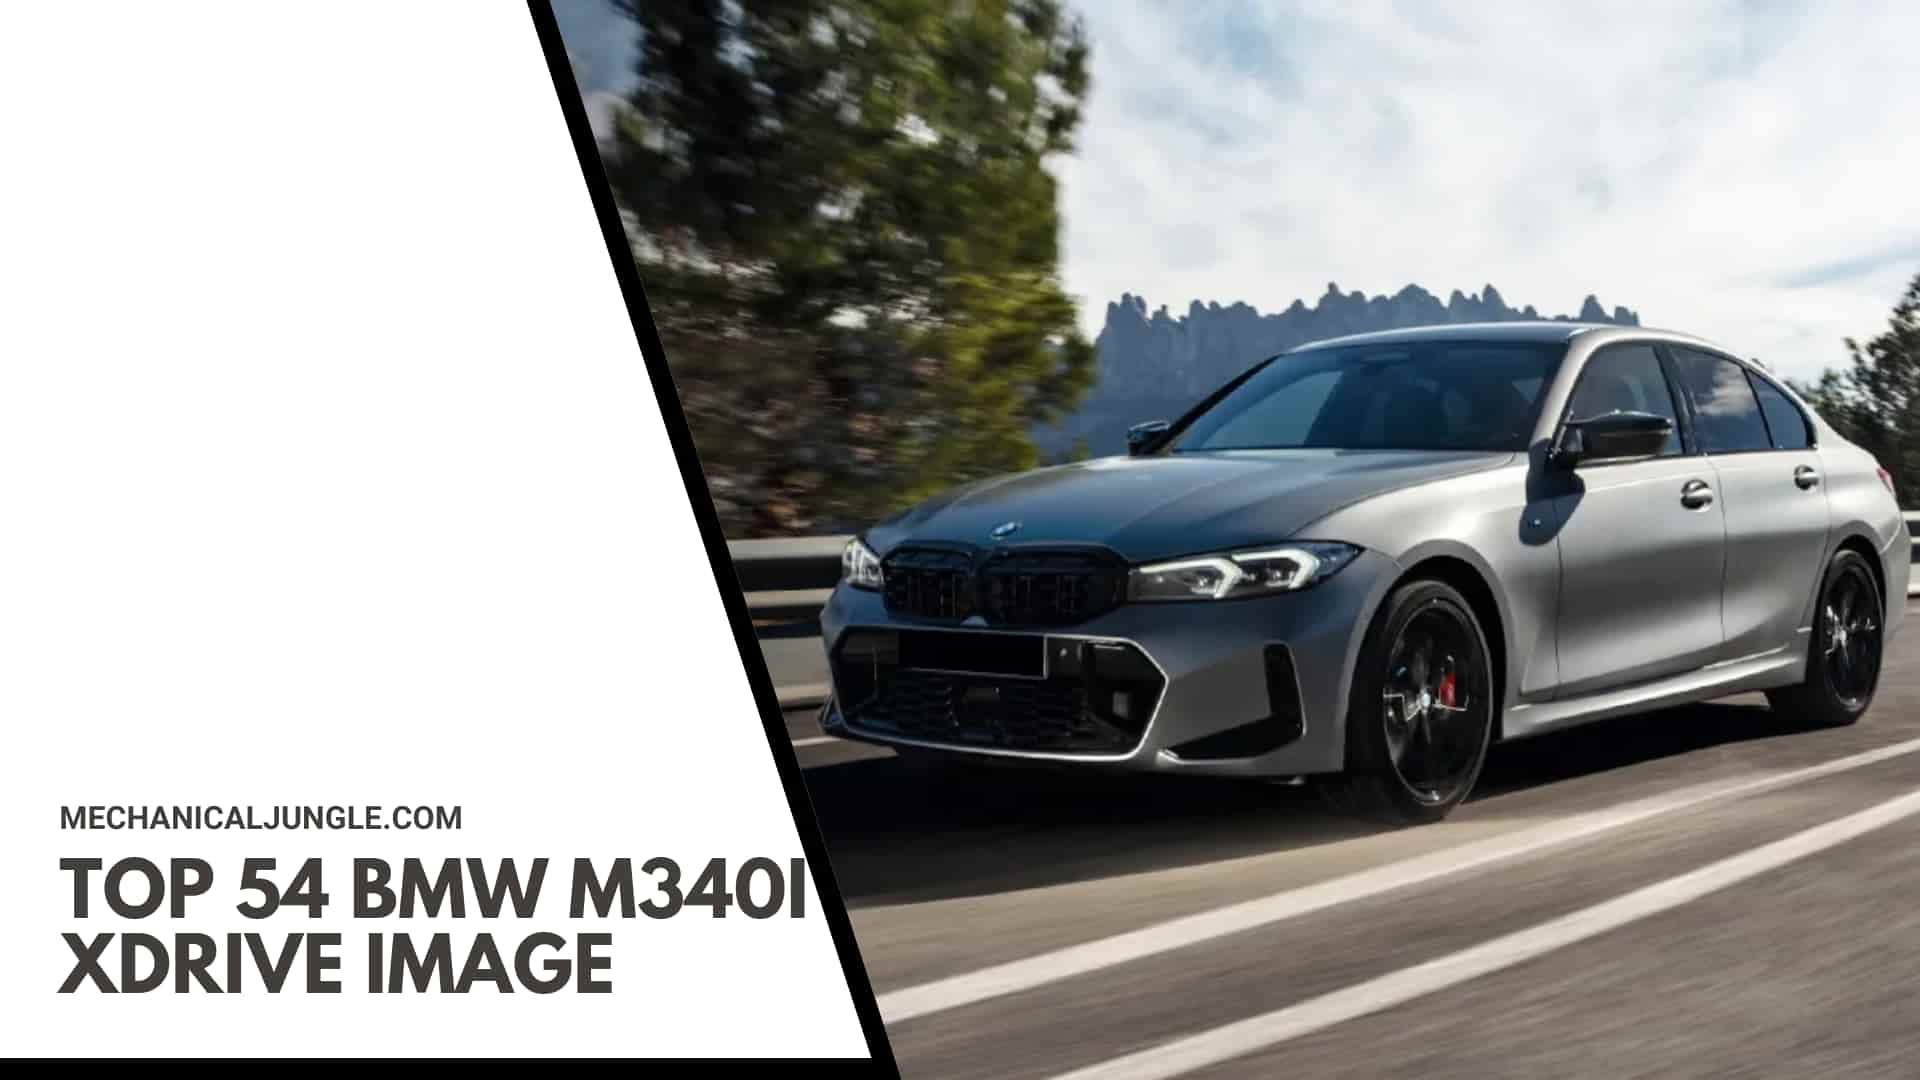 Top 54 BMW M340i xDrive Image